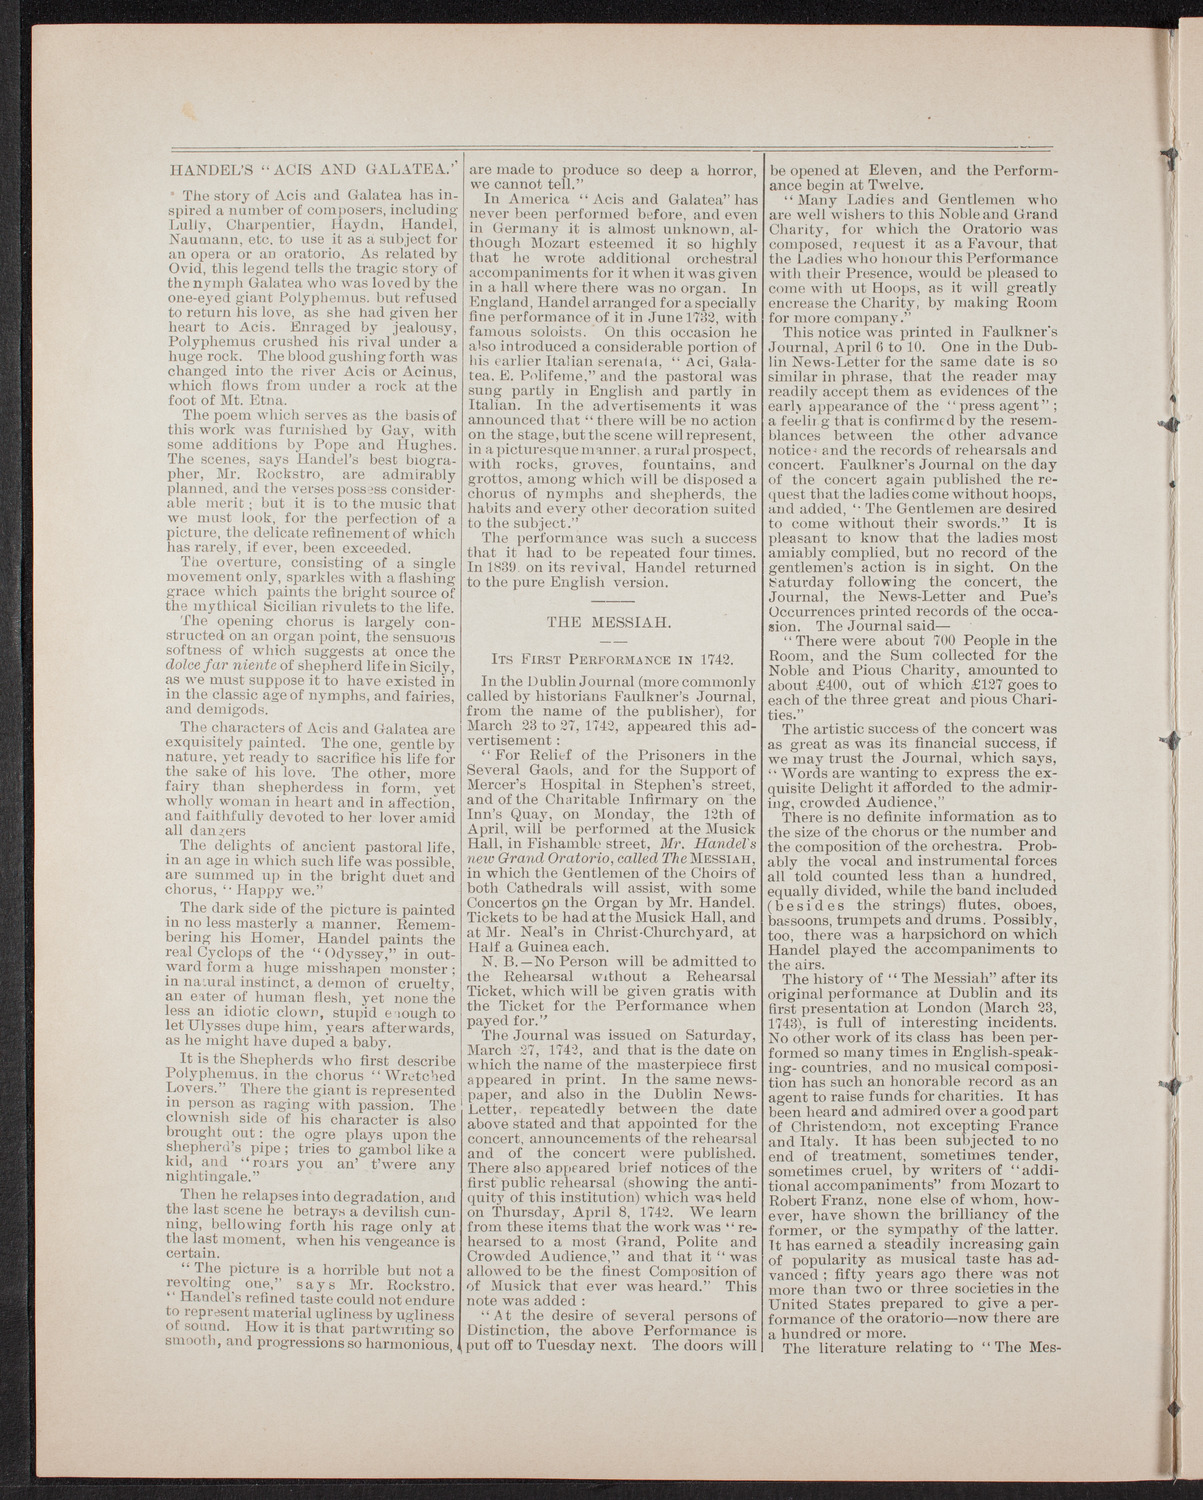 New York Symphony Orchestra: Handel Festival, April 28, 1892, program page 2